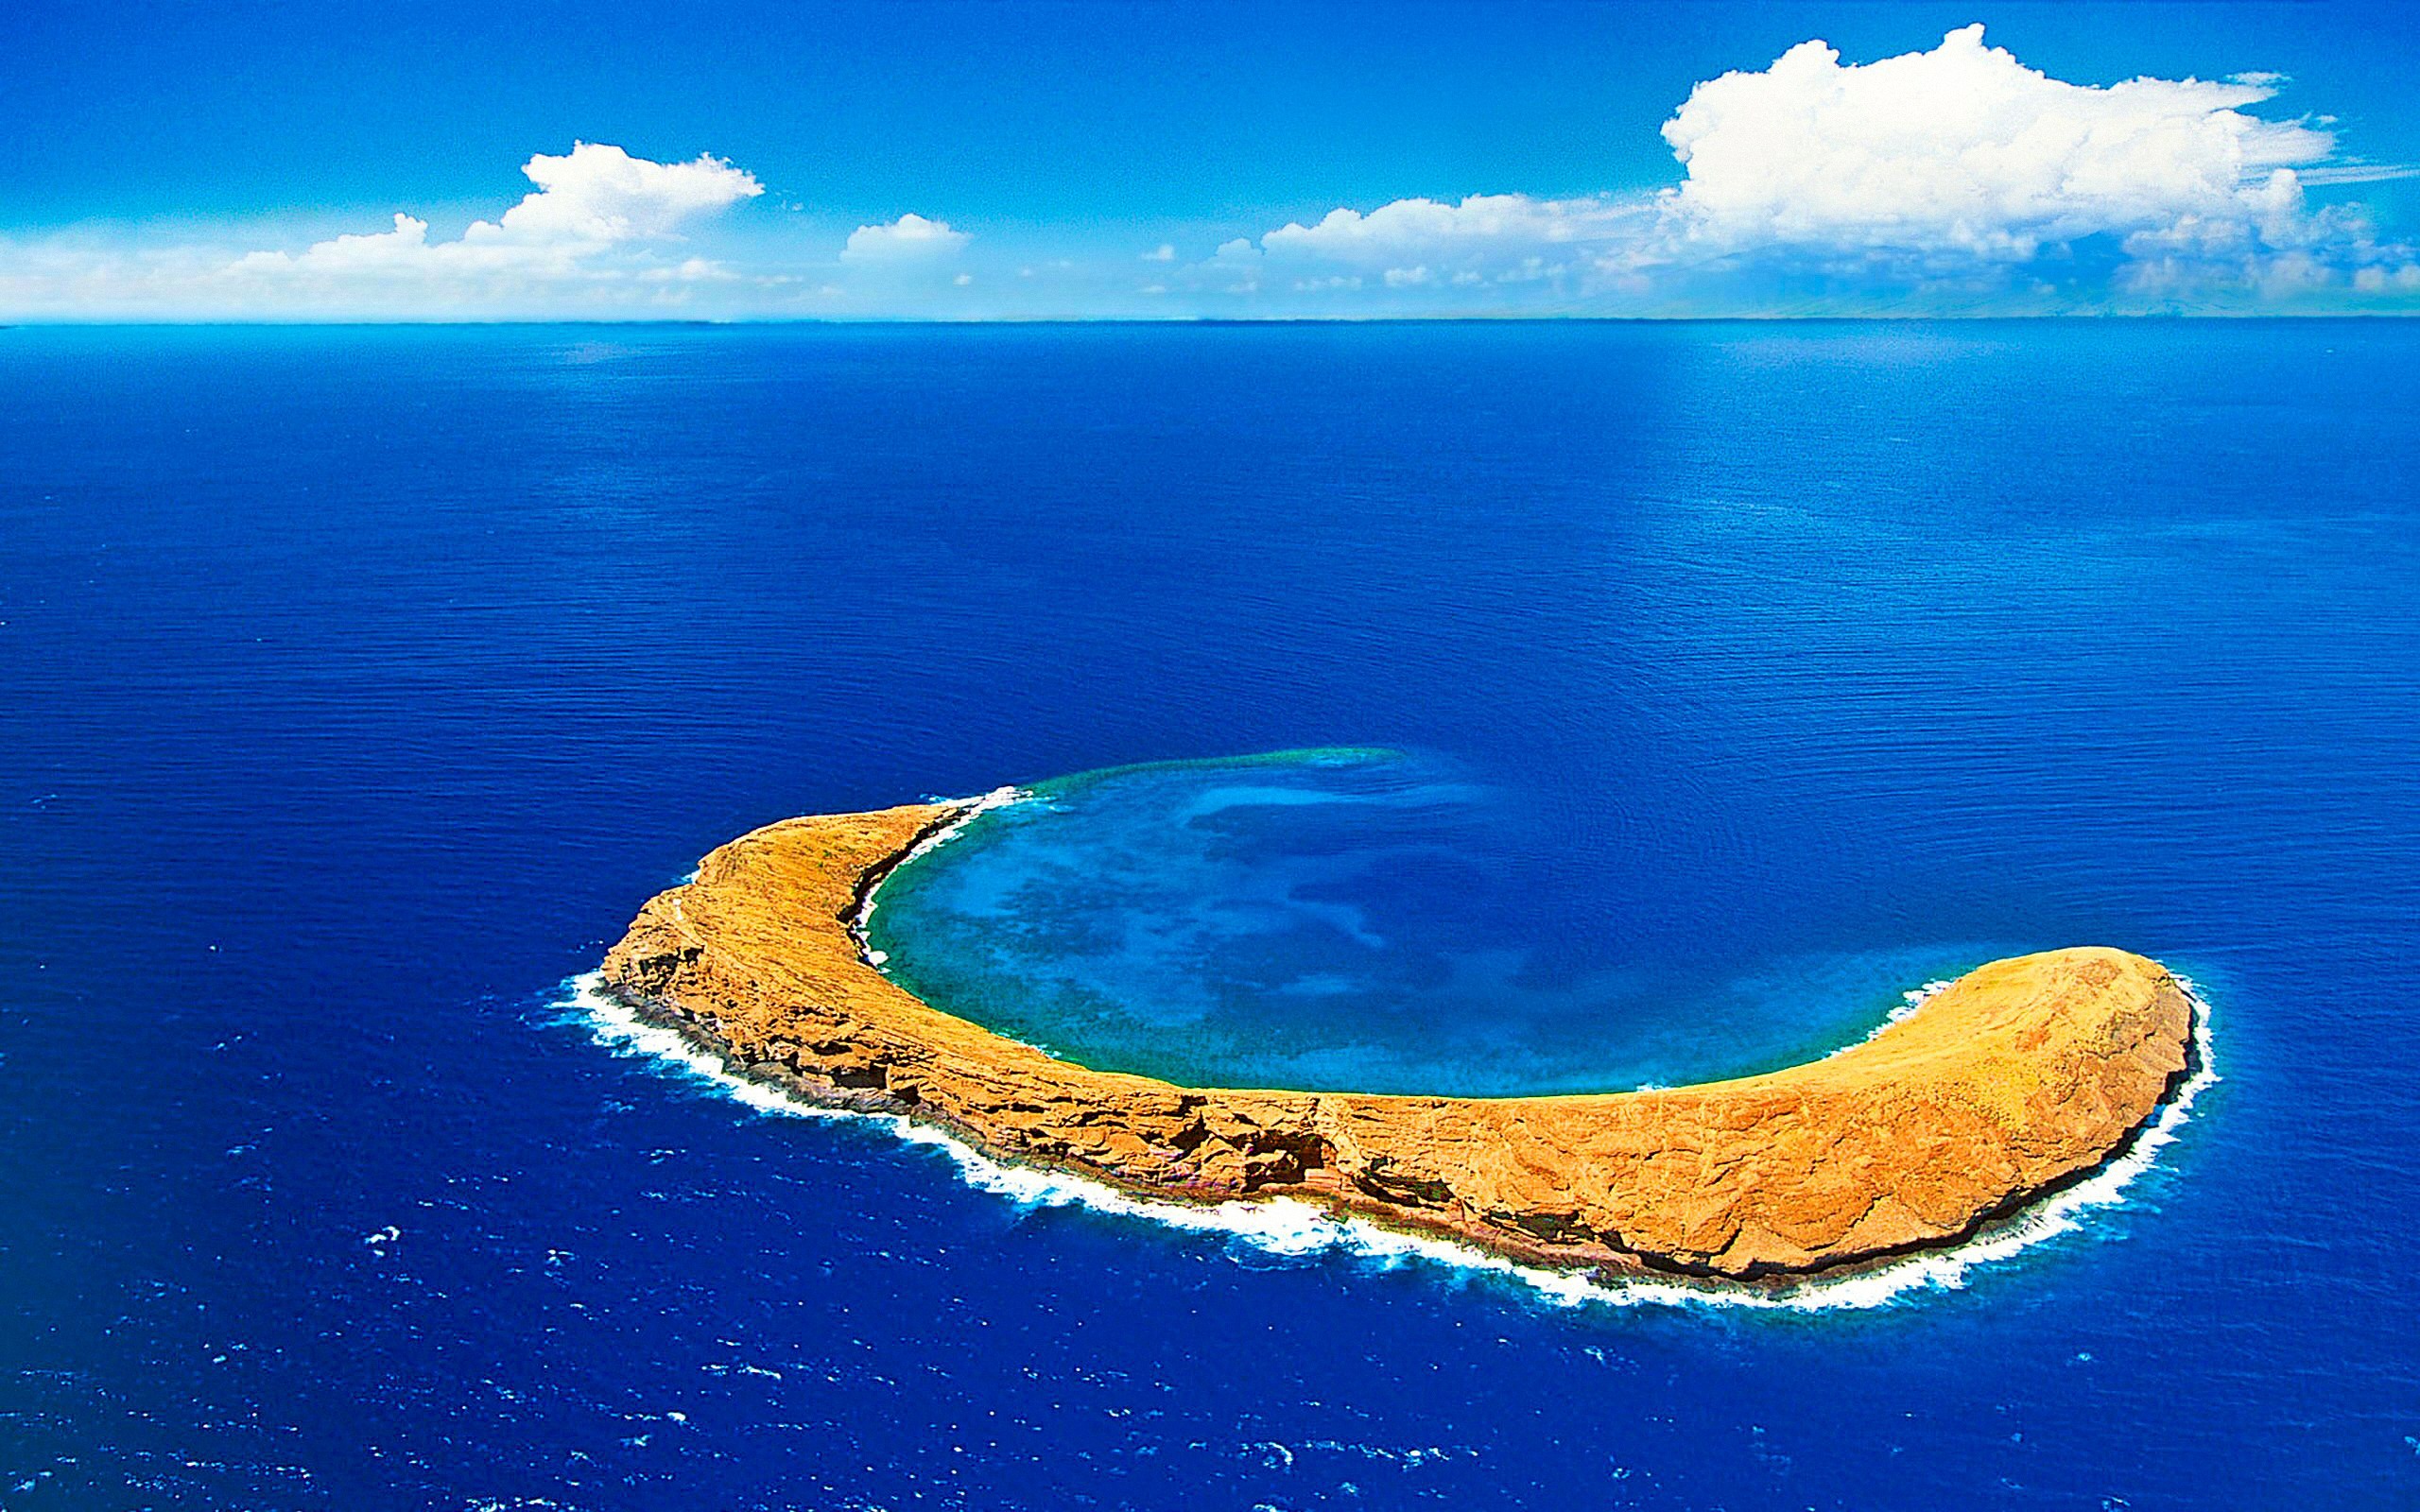 Остров человек в океане. Остров Молокини, Гавайи. Кратер Молокини, Гавайи. Атолл Рокас Бразилия. Азорские острова.